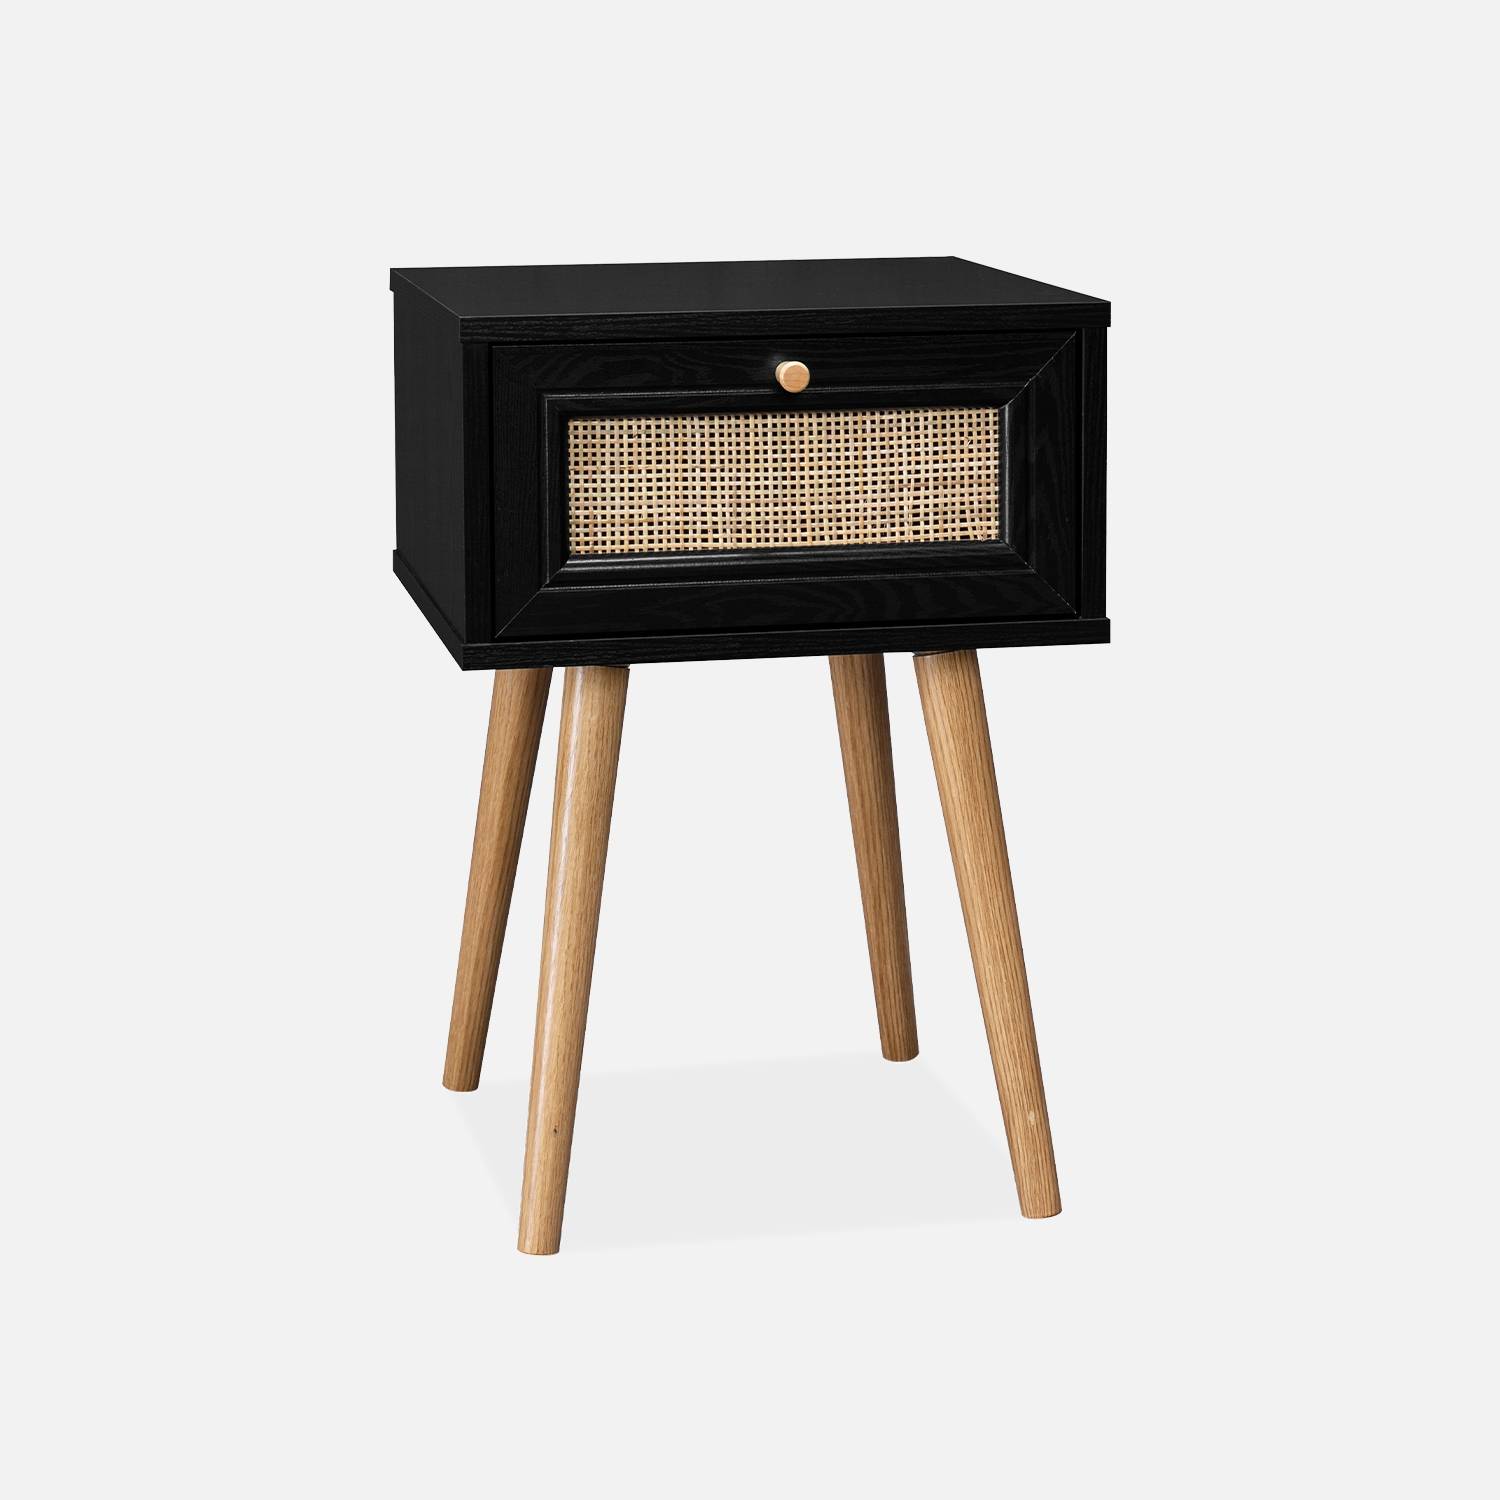 Black wood effect bedside table / cane 1 drawer |sweeek